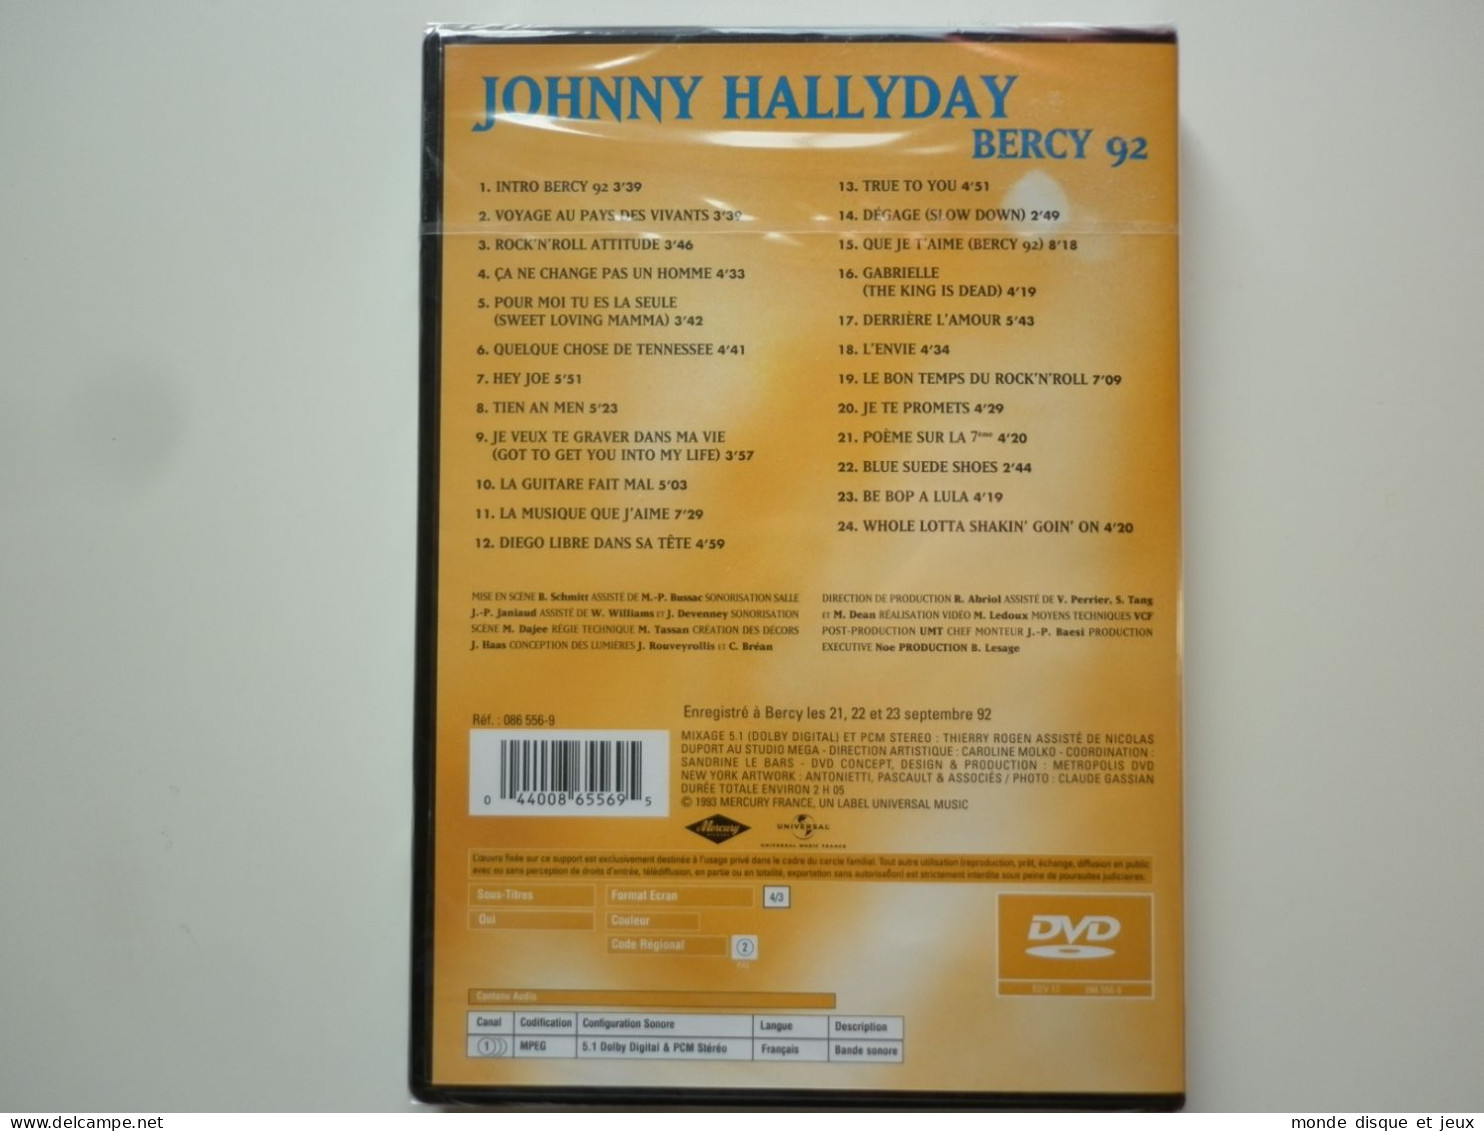 Johnny Hallyday Dvd Bercy 92 - Music On DVD